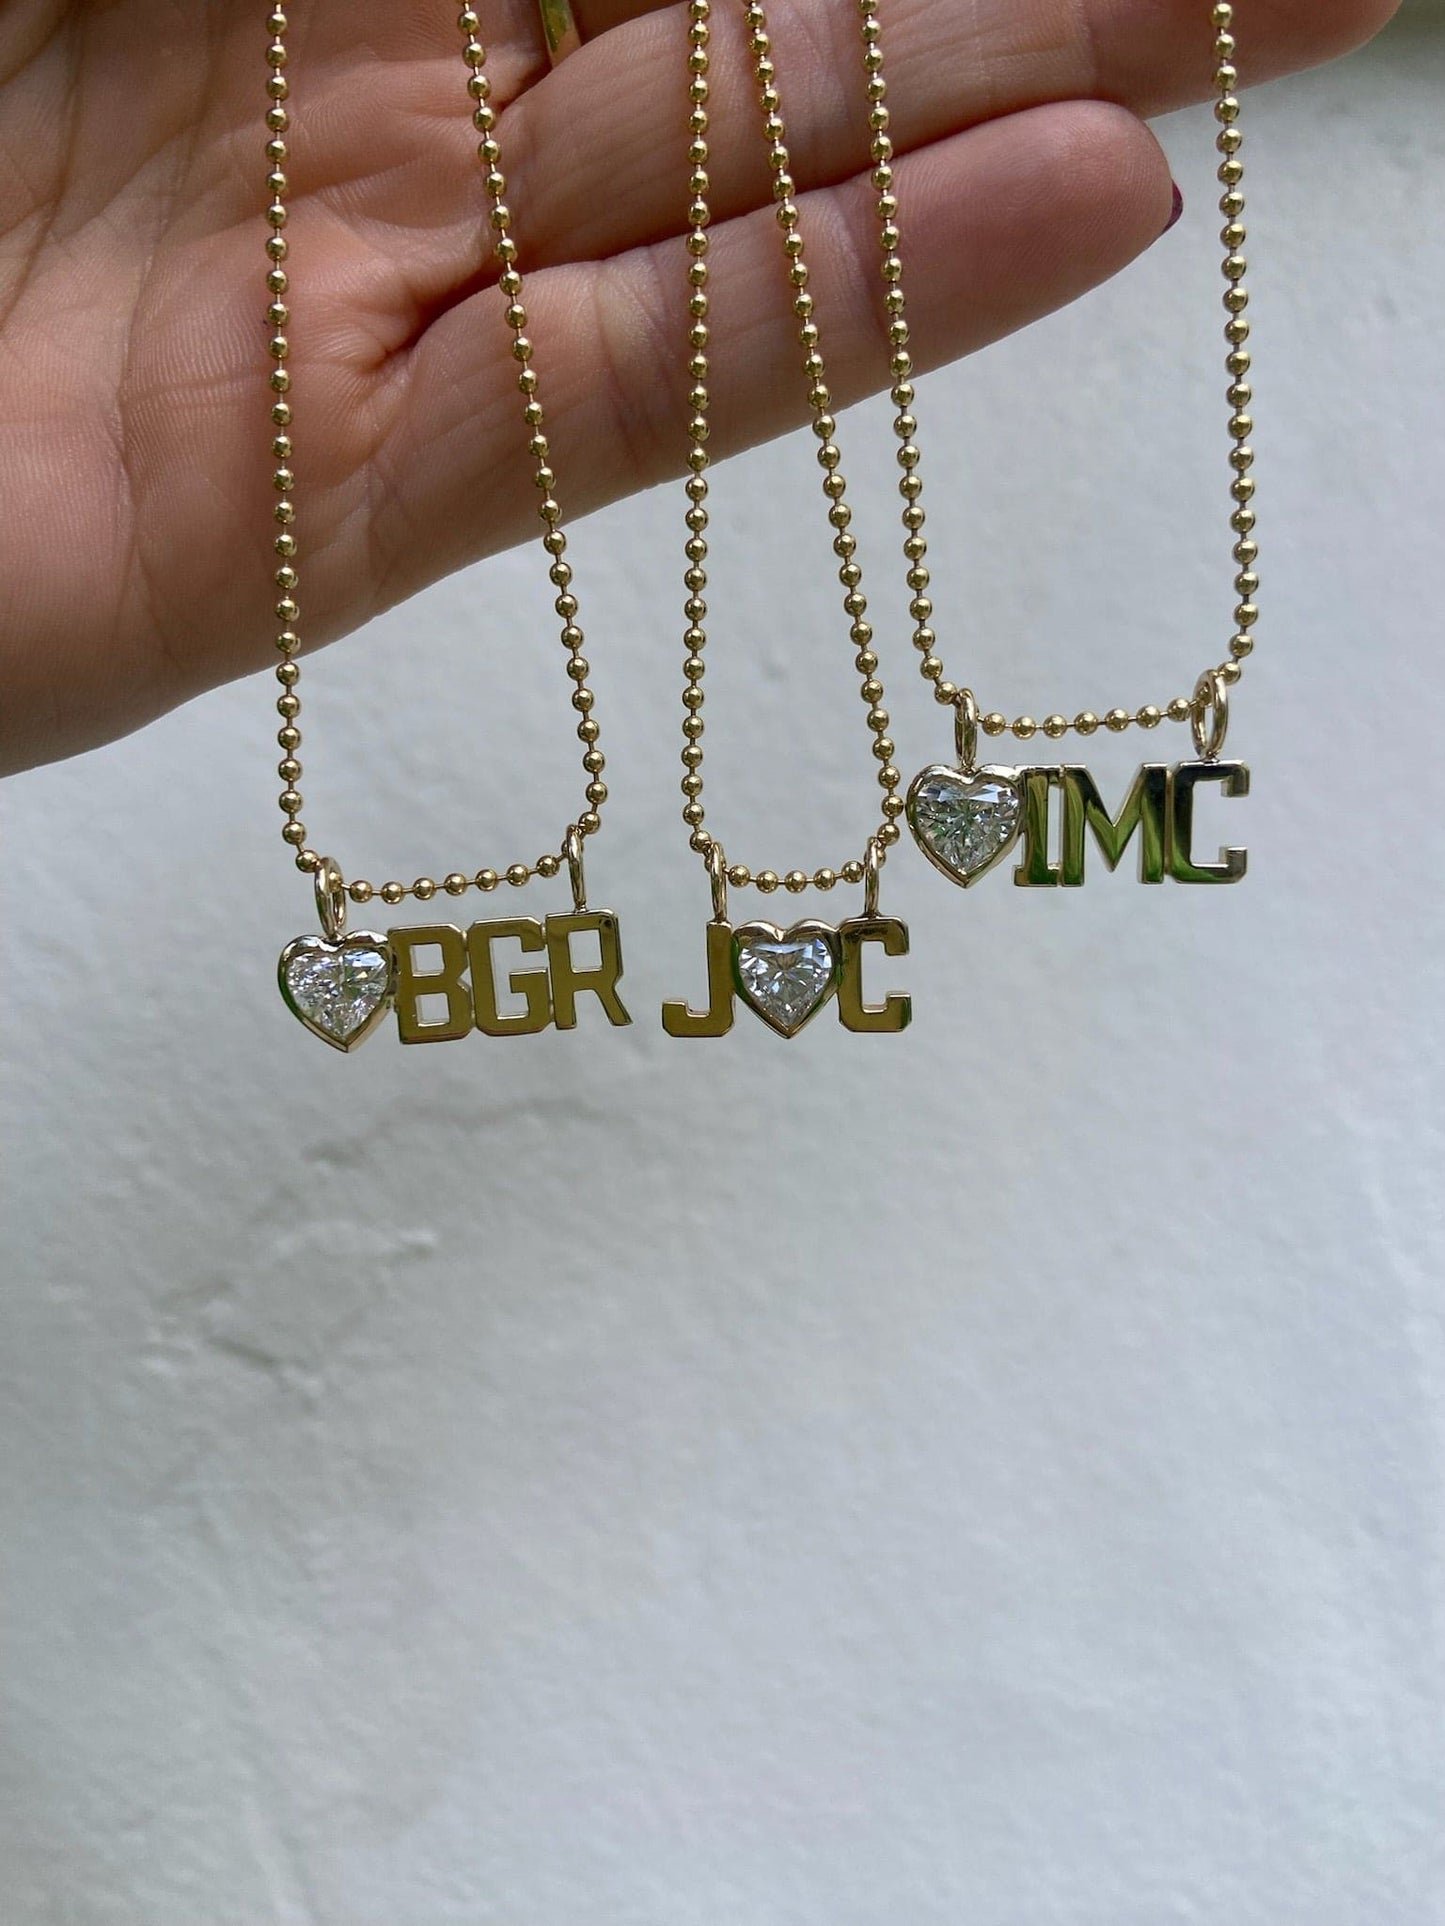 Many three letter sweetheart pendant